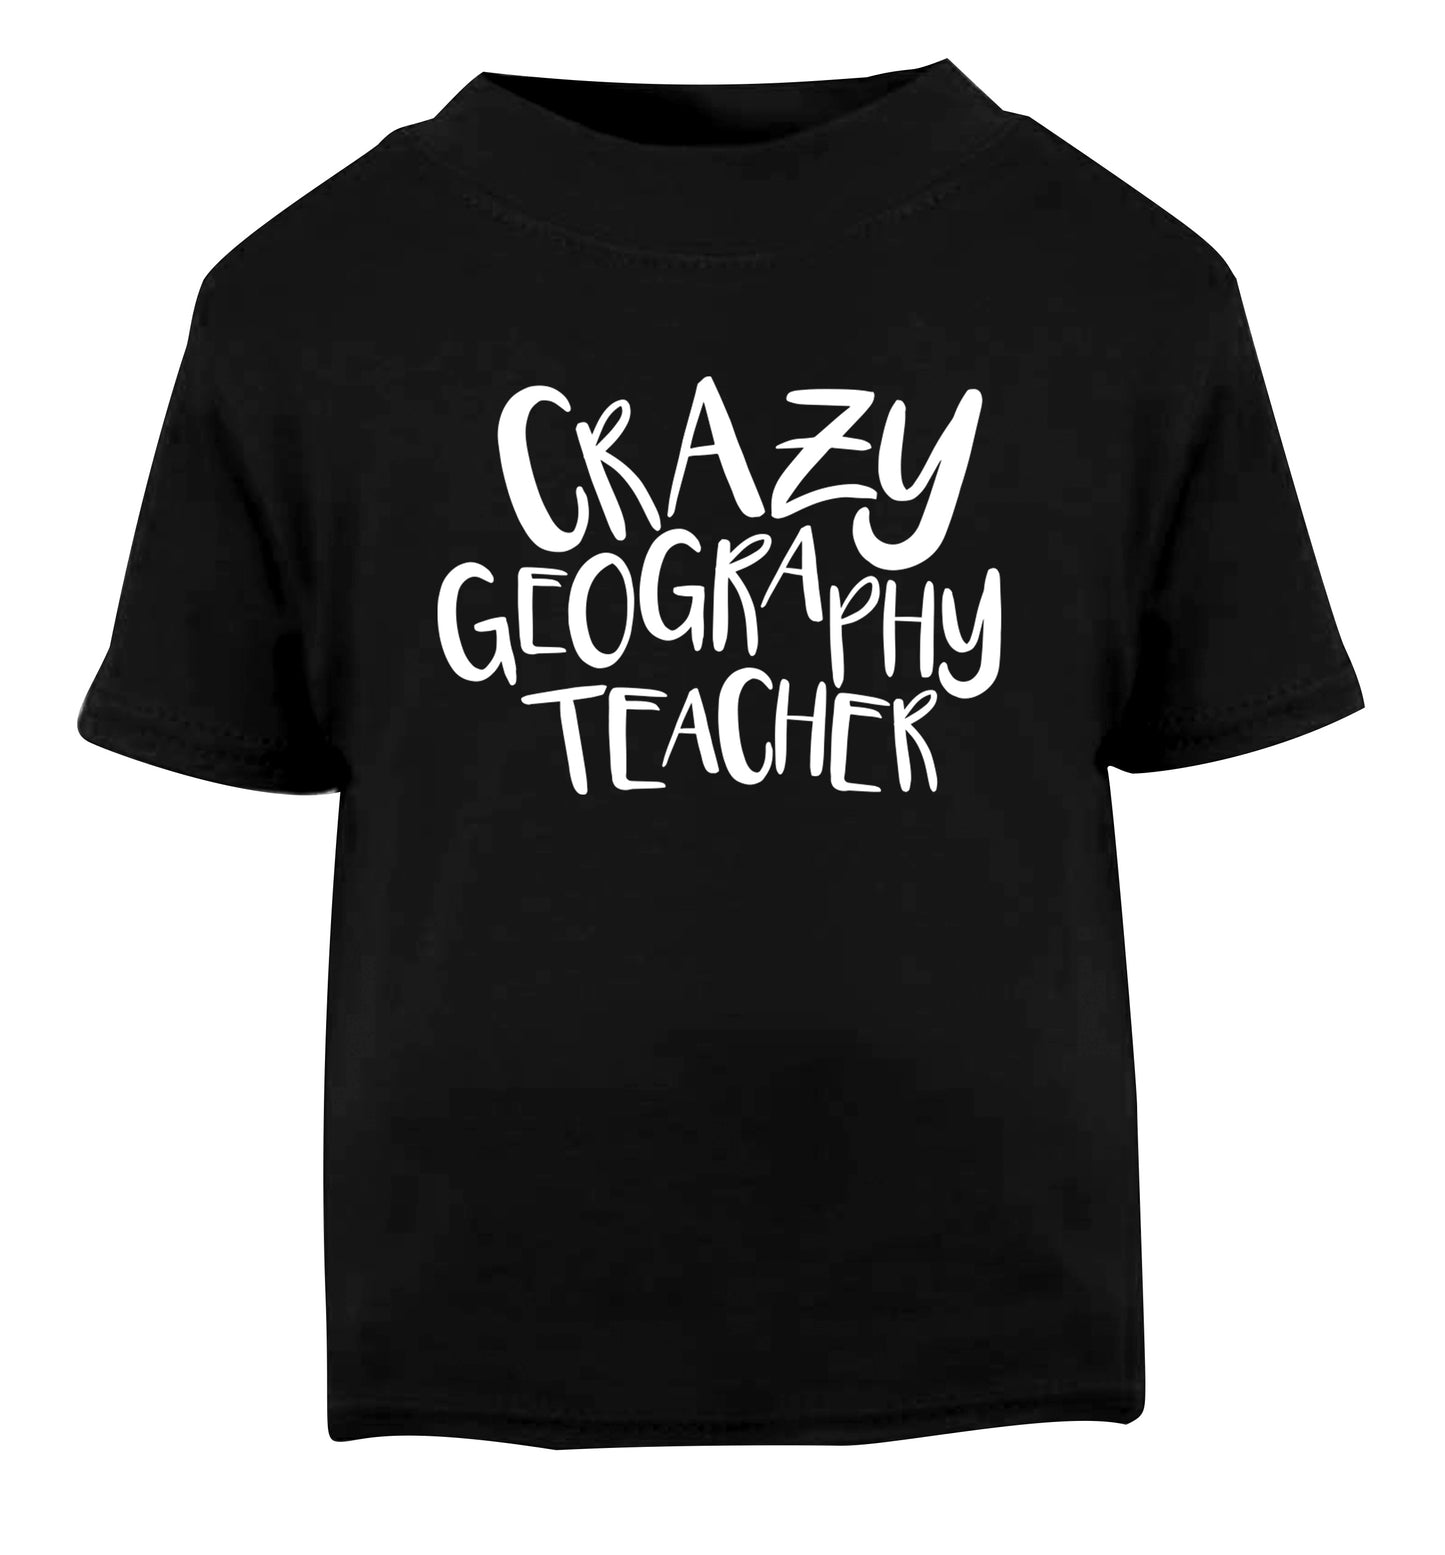 Crazy geography teacher Black Baby Toddler Tshirt 2 years